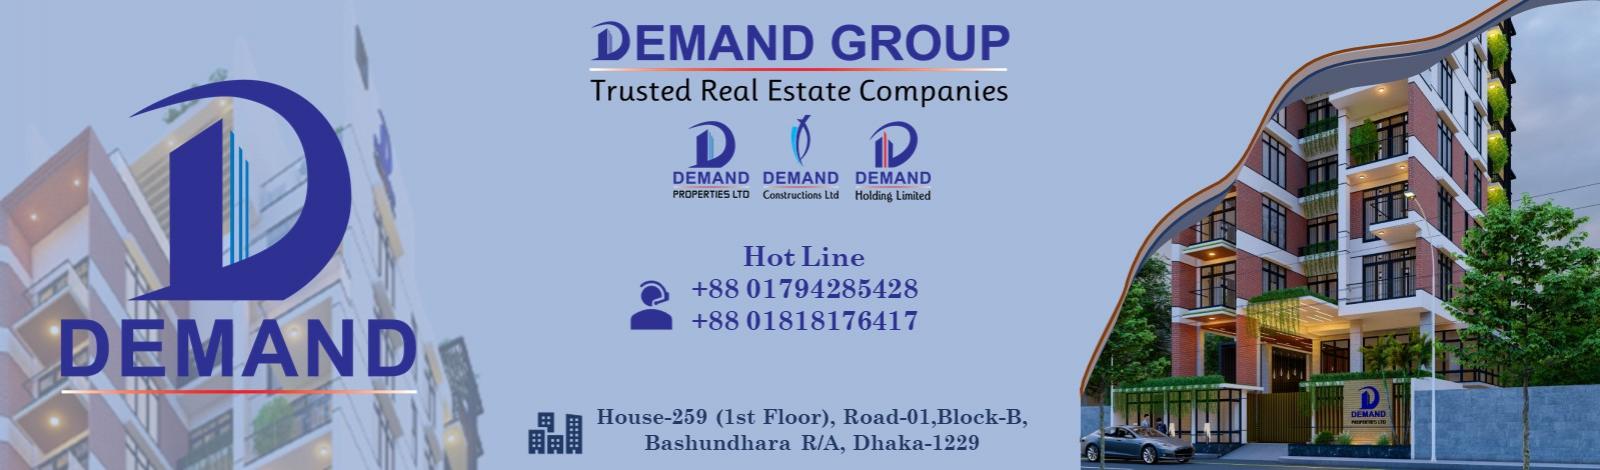 Demand Properties Ltd. banner